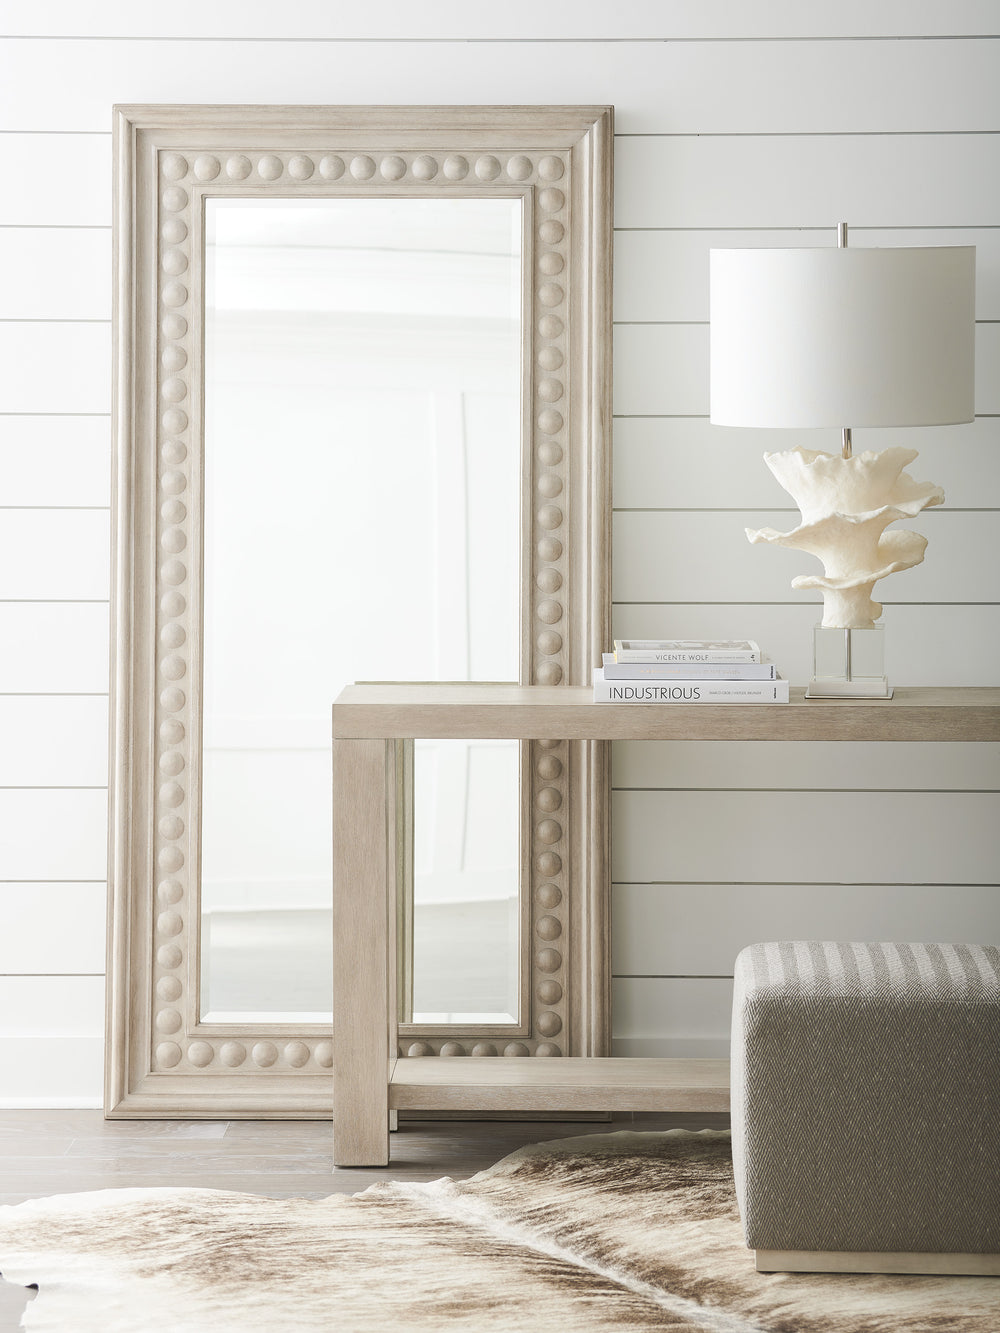 American Home Furniture | Barclay Butera  - Malibu Carbon Floor Mirror